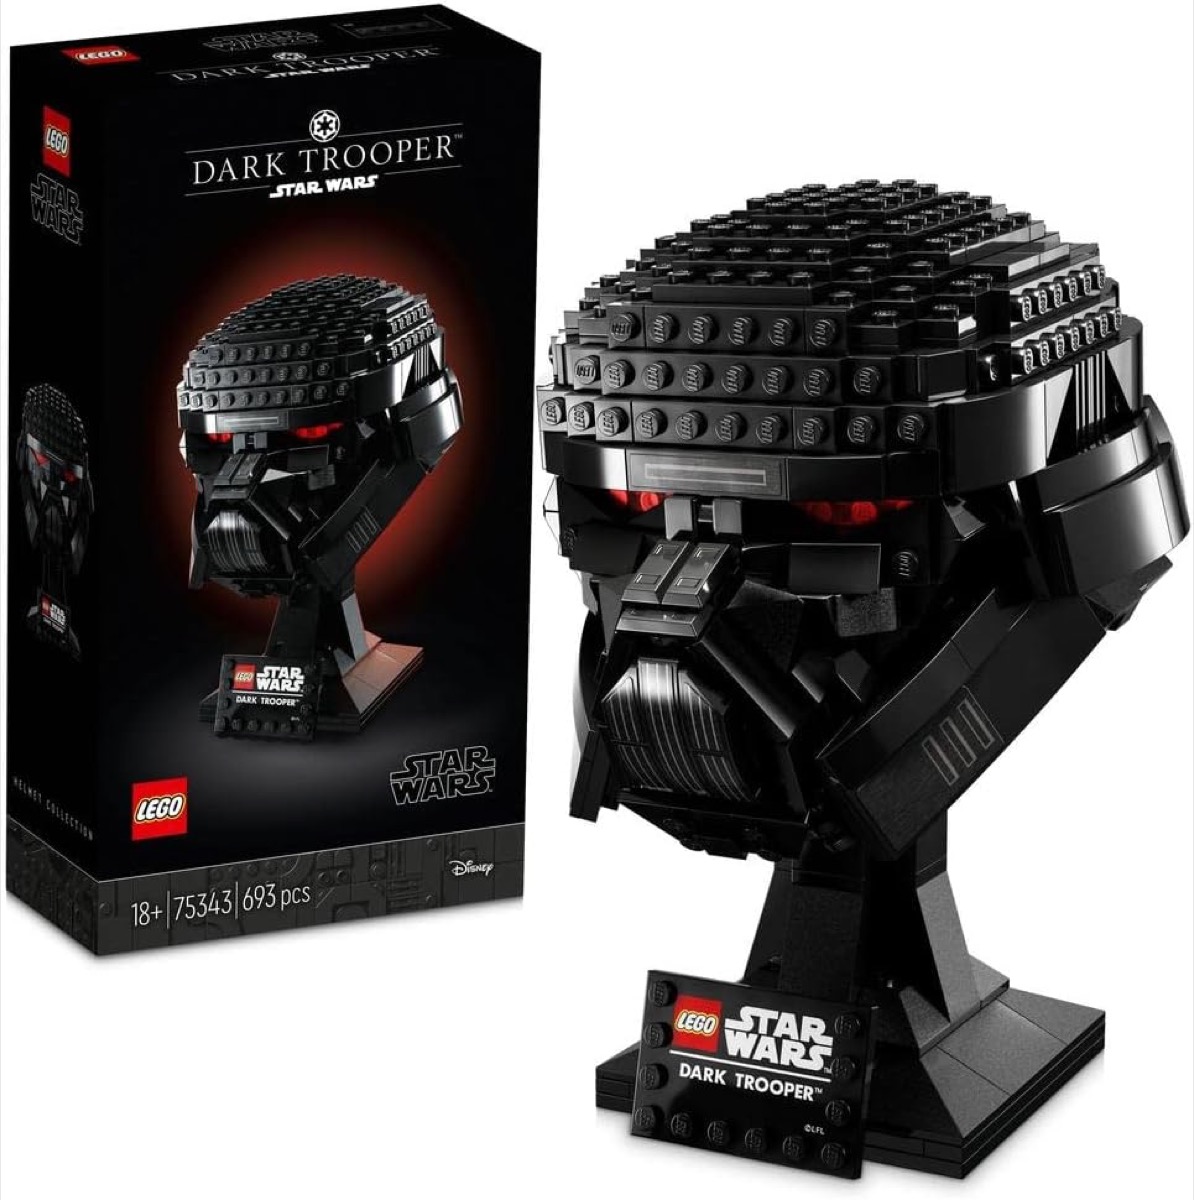 A LEGO version of the Dark Trooper helmet from "Star Wars" 